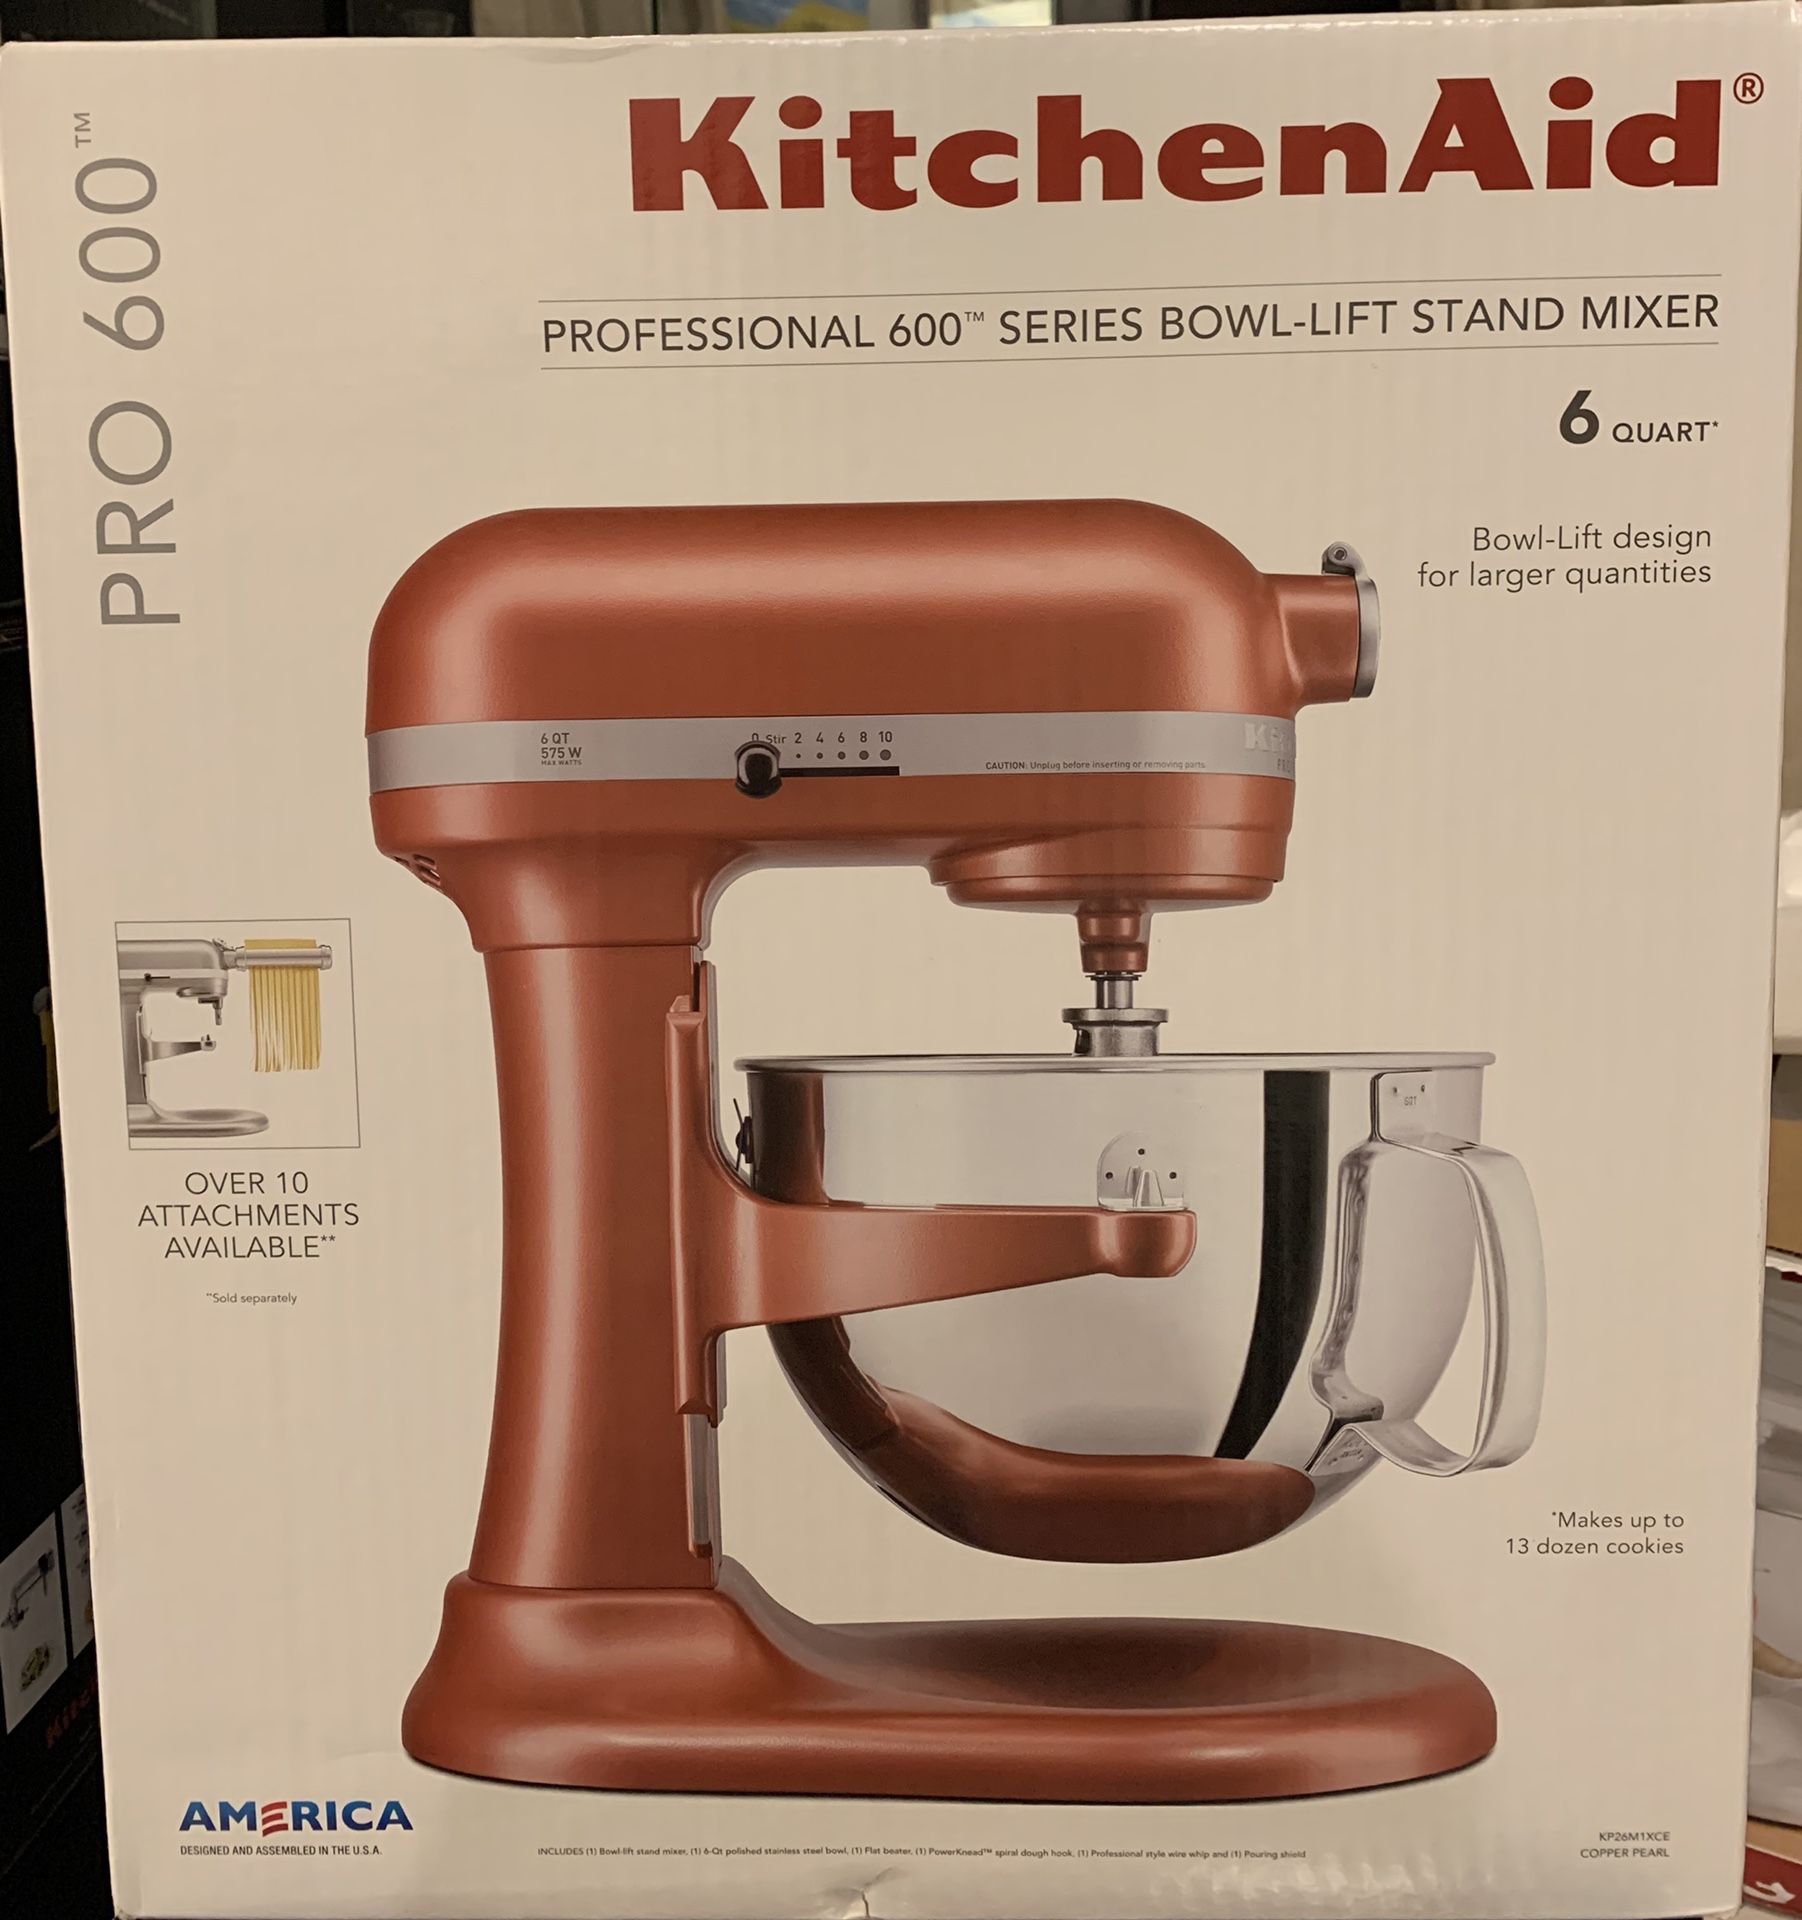 Brand New Kitchenaid Pro 600 6qt stand mixer